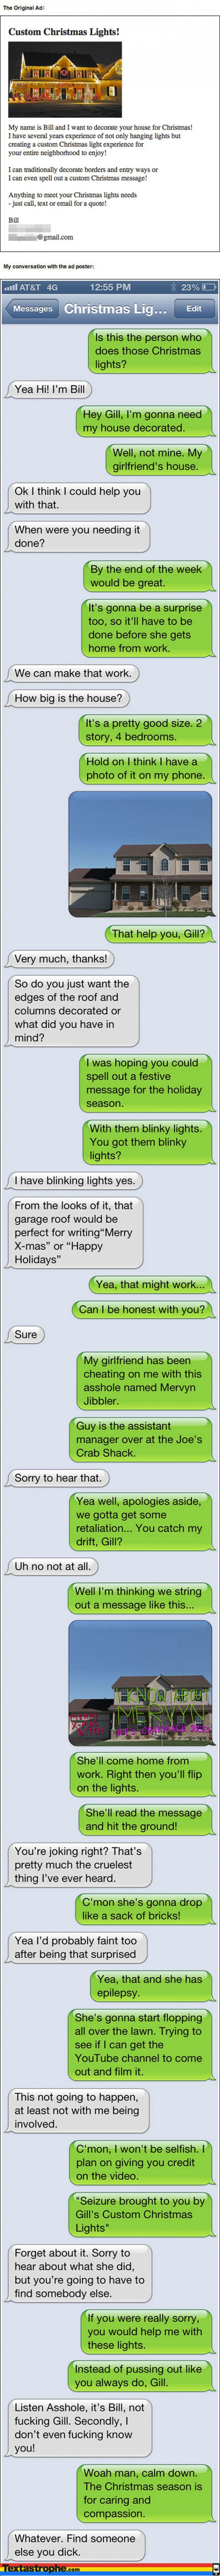 9 Hilarious Texting Pranks